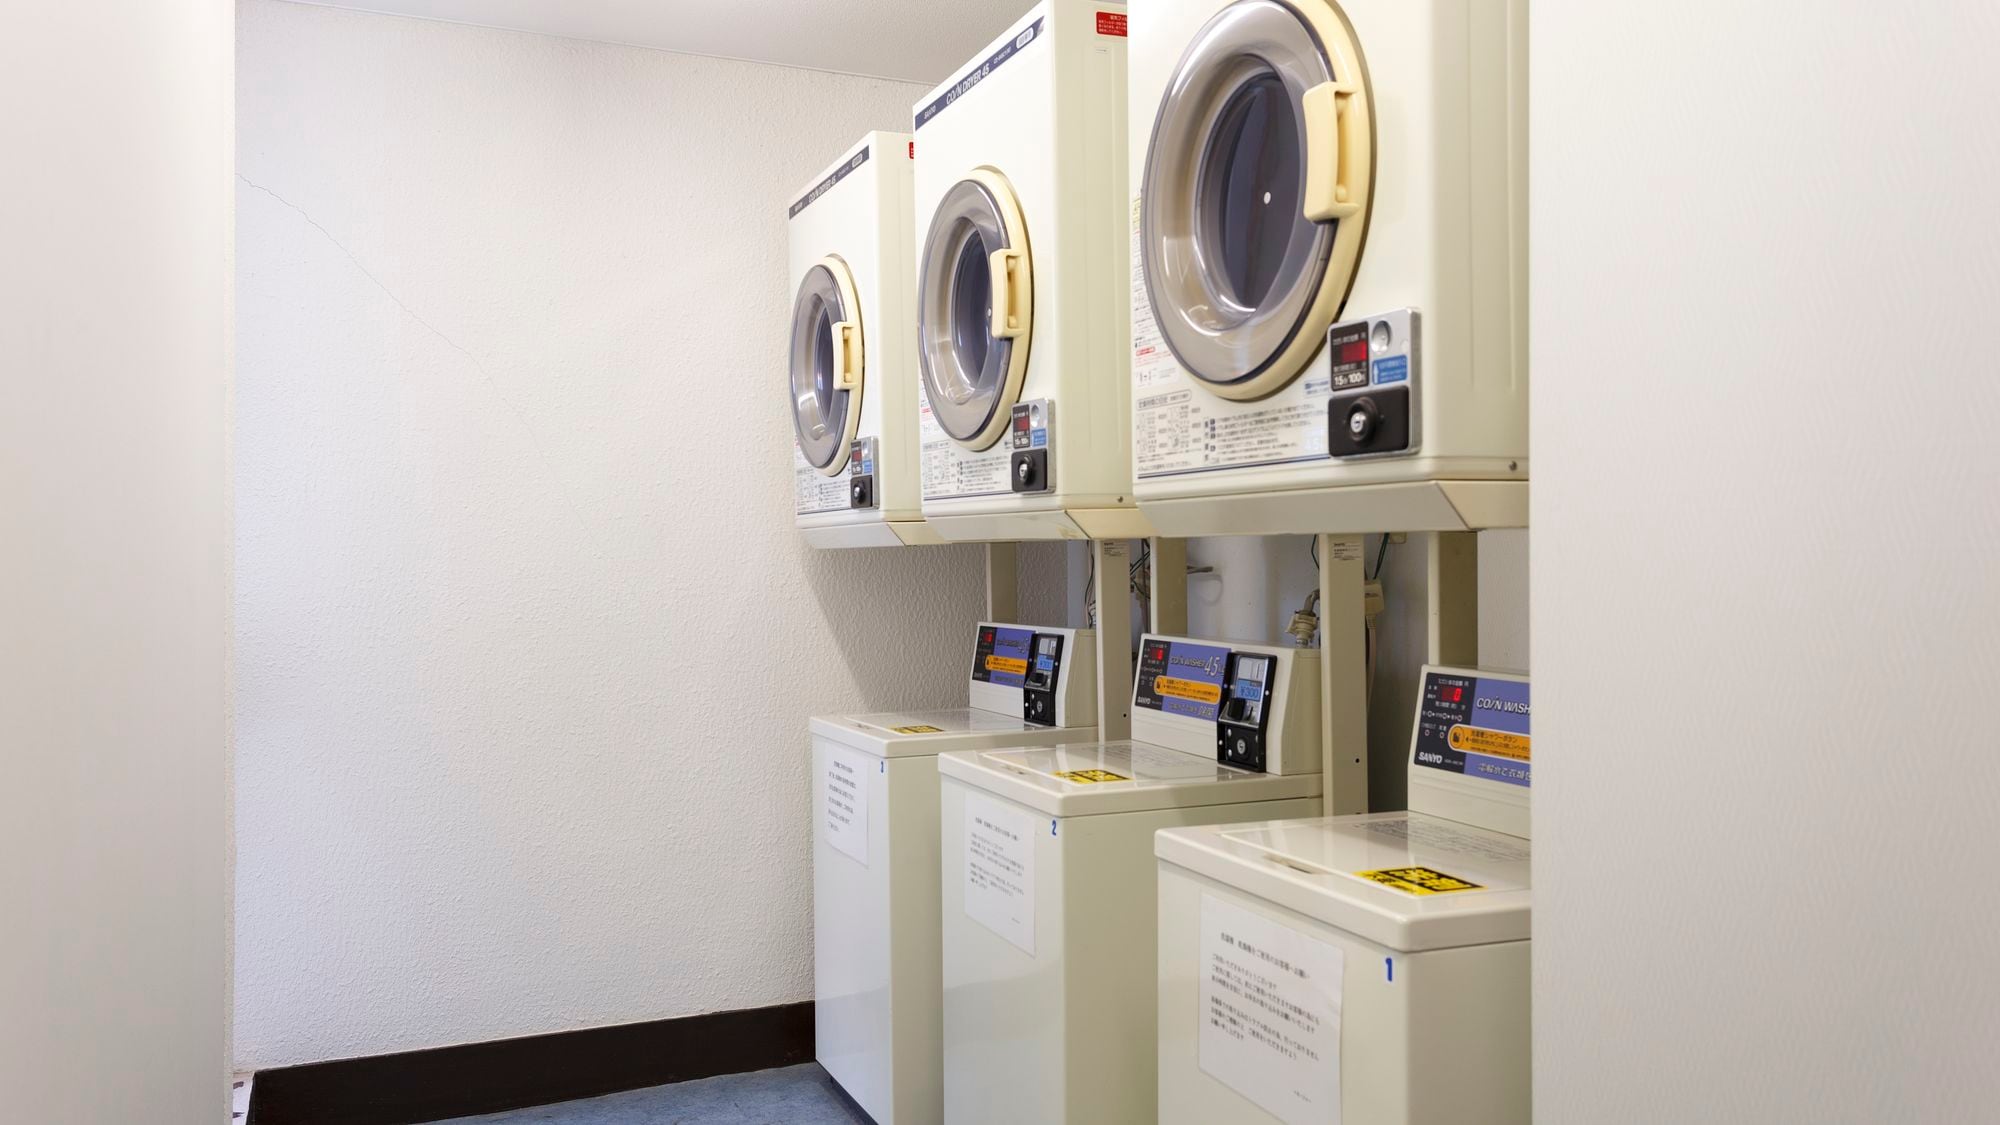 [Coin laundry] Harga: 300 yen per mesin cuci / 100 yen untuk pengering 15 menit